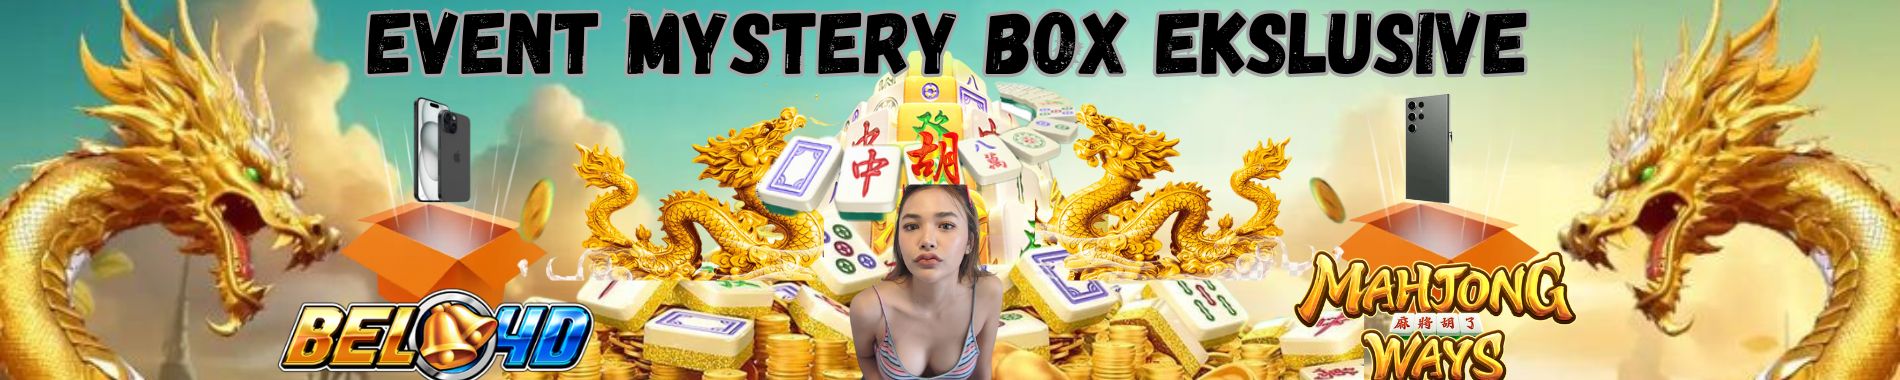 EVENT MYSTERY BOX EKSLUSIVE